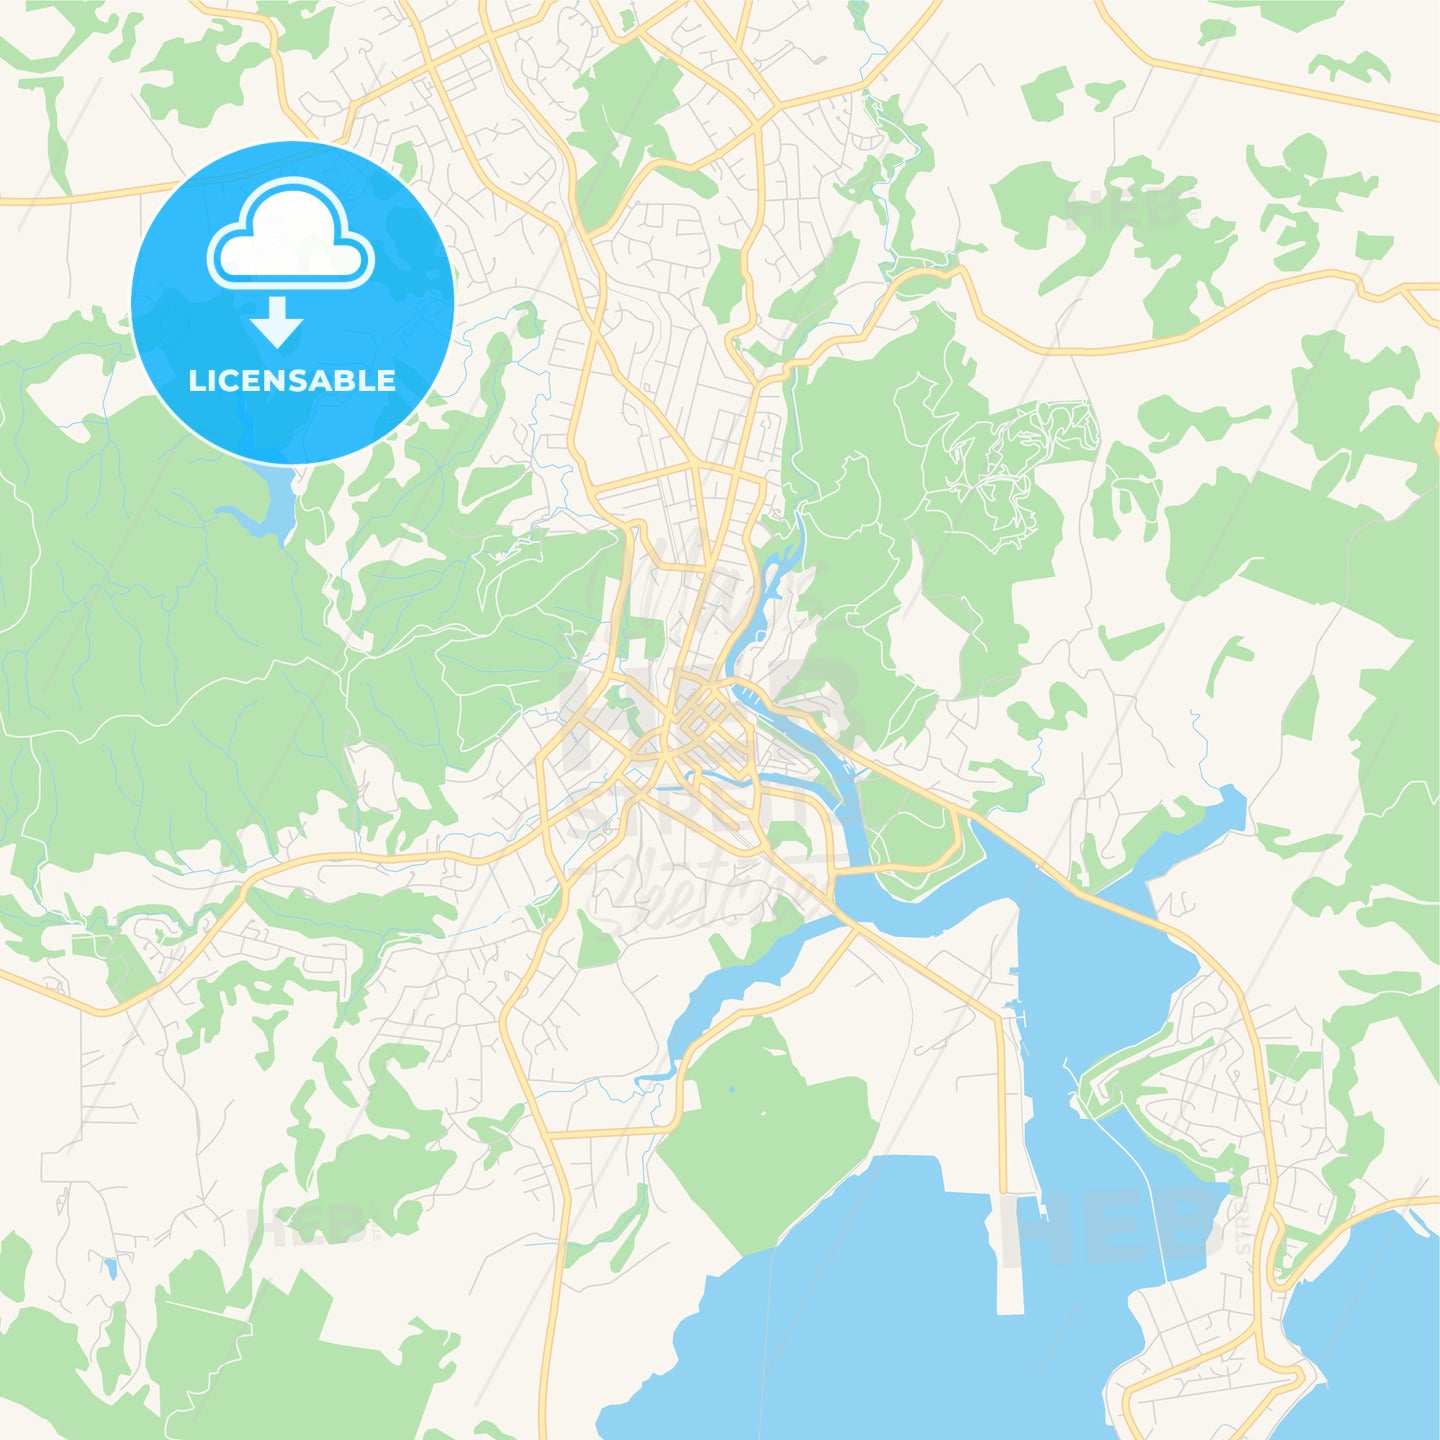 Printable street map of Whangarei, New Zealand